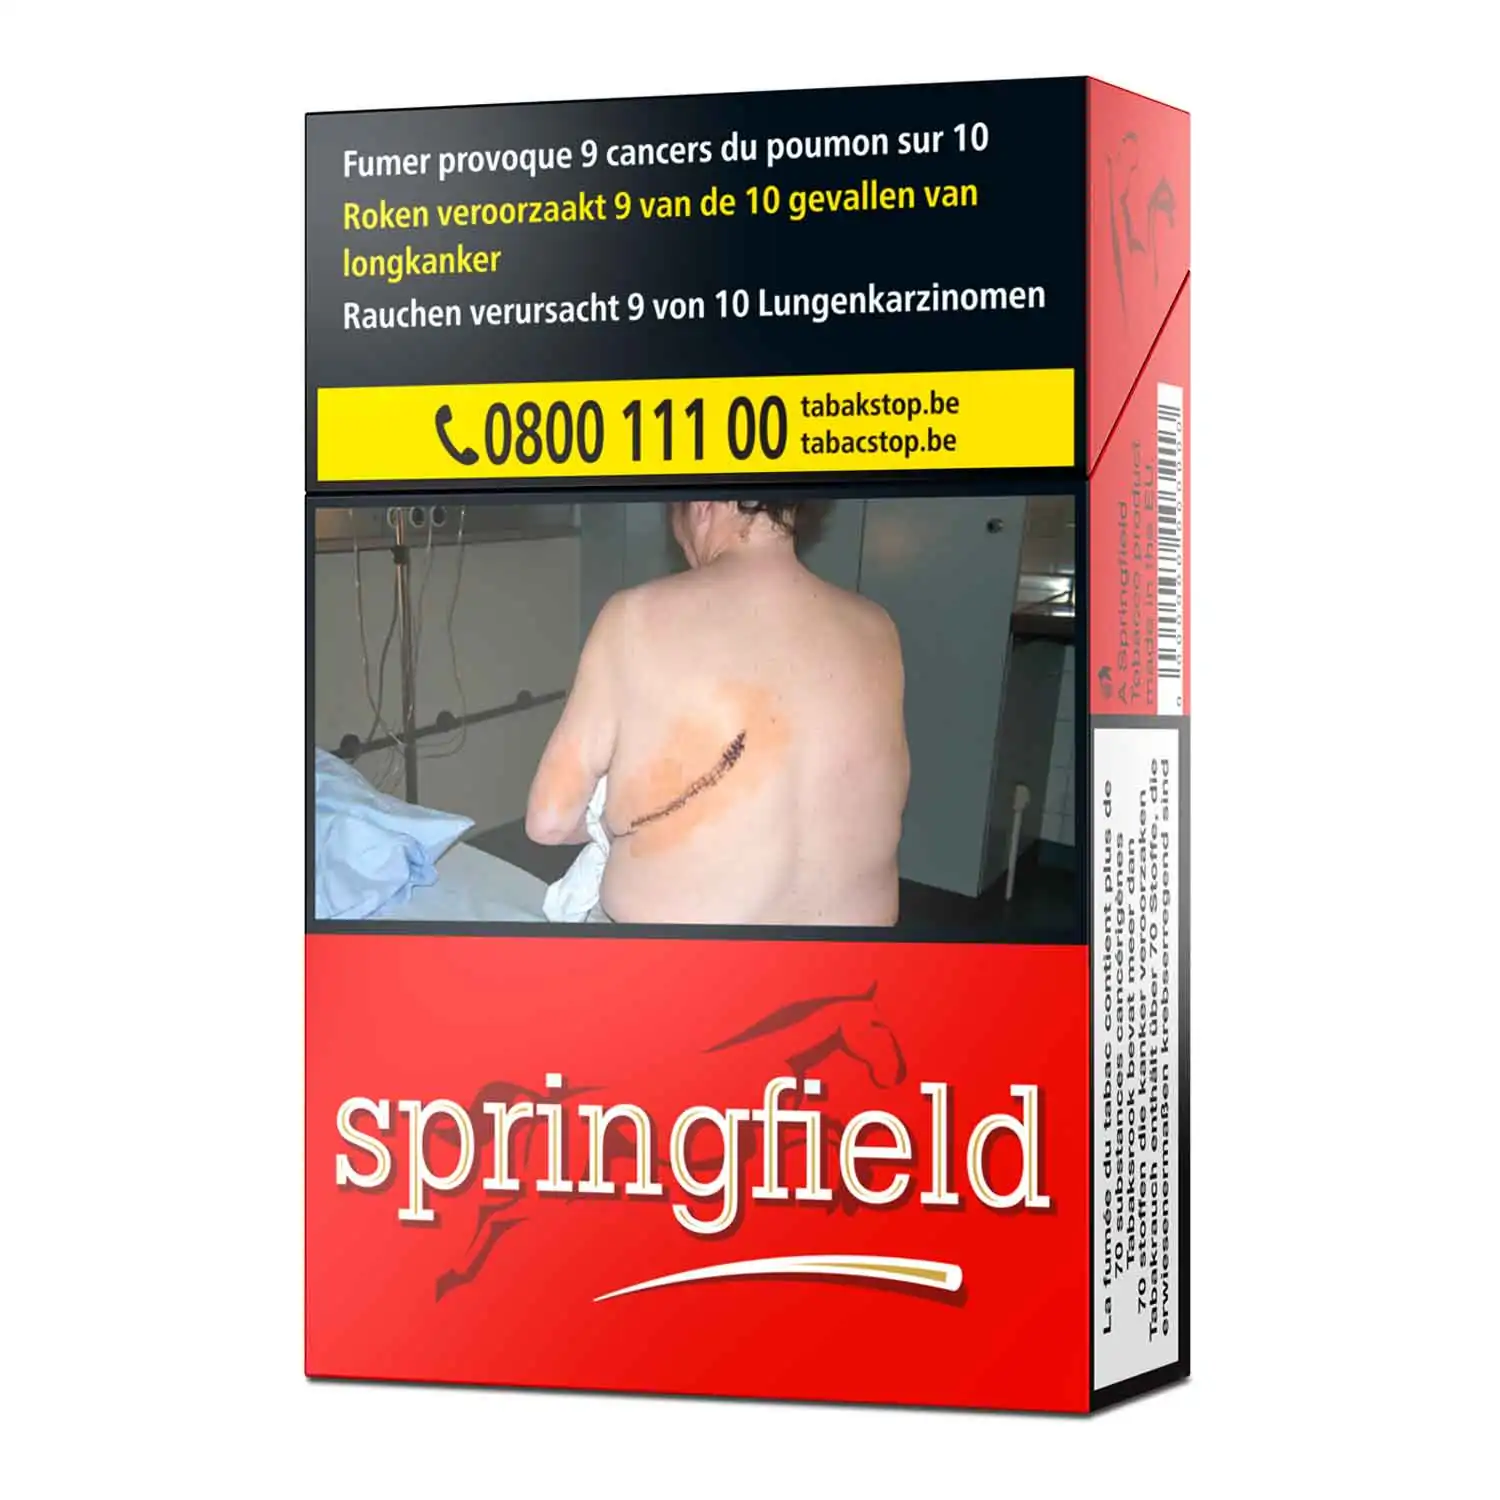 Springfield red 20 - Buy at Real Tobacco